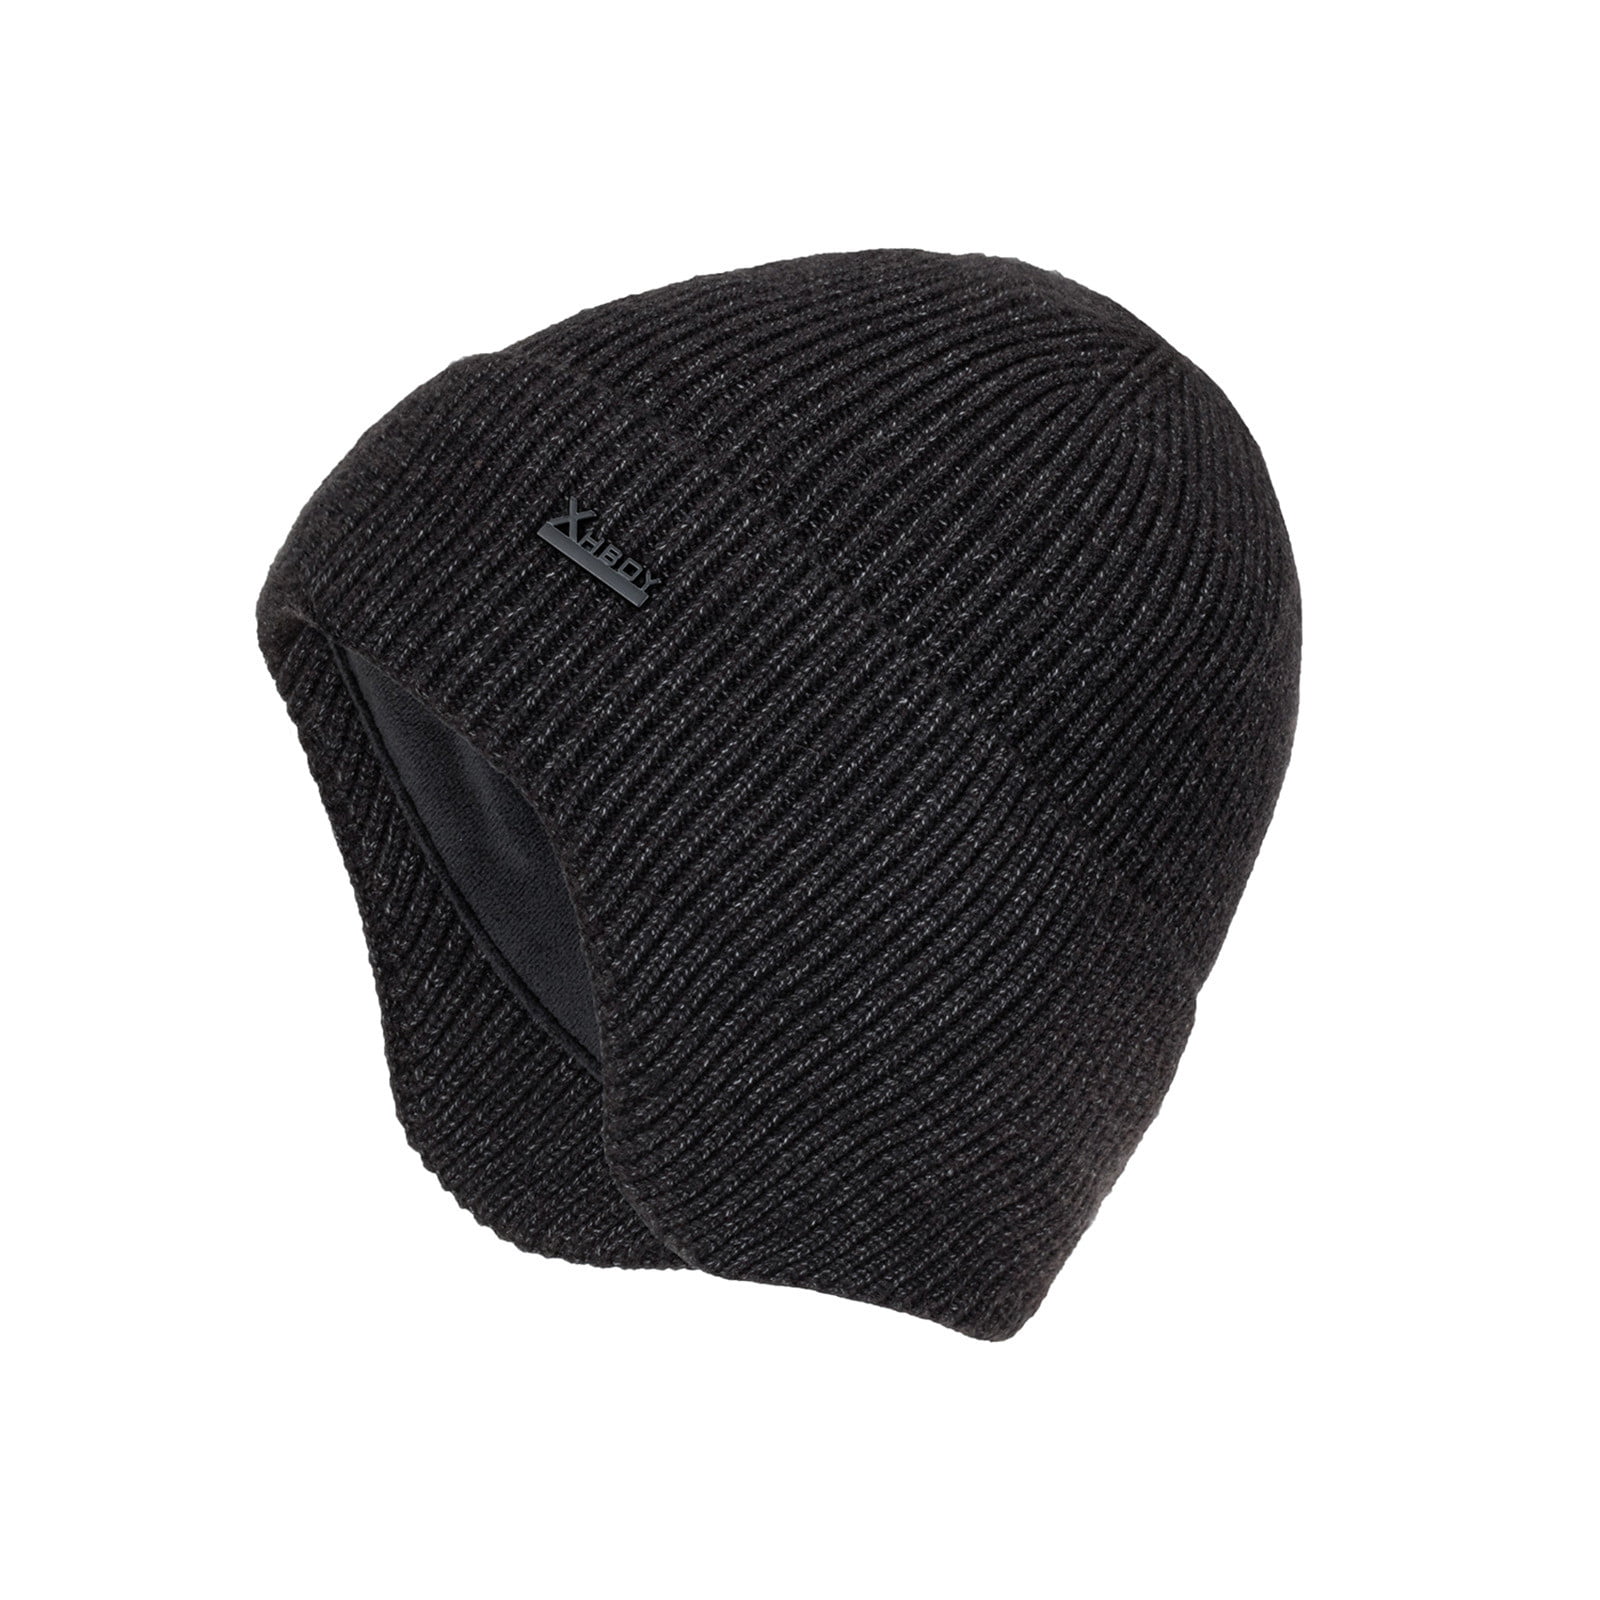 Unisex Fashion Knit Cap Hedging Head Hat Beanie Cap Winter Warmer Outdoor Hat 